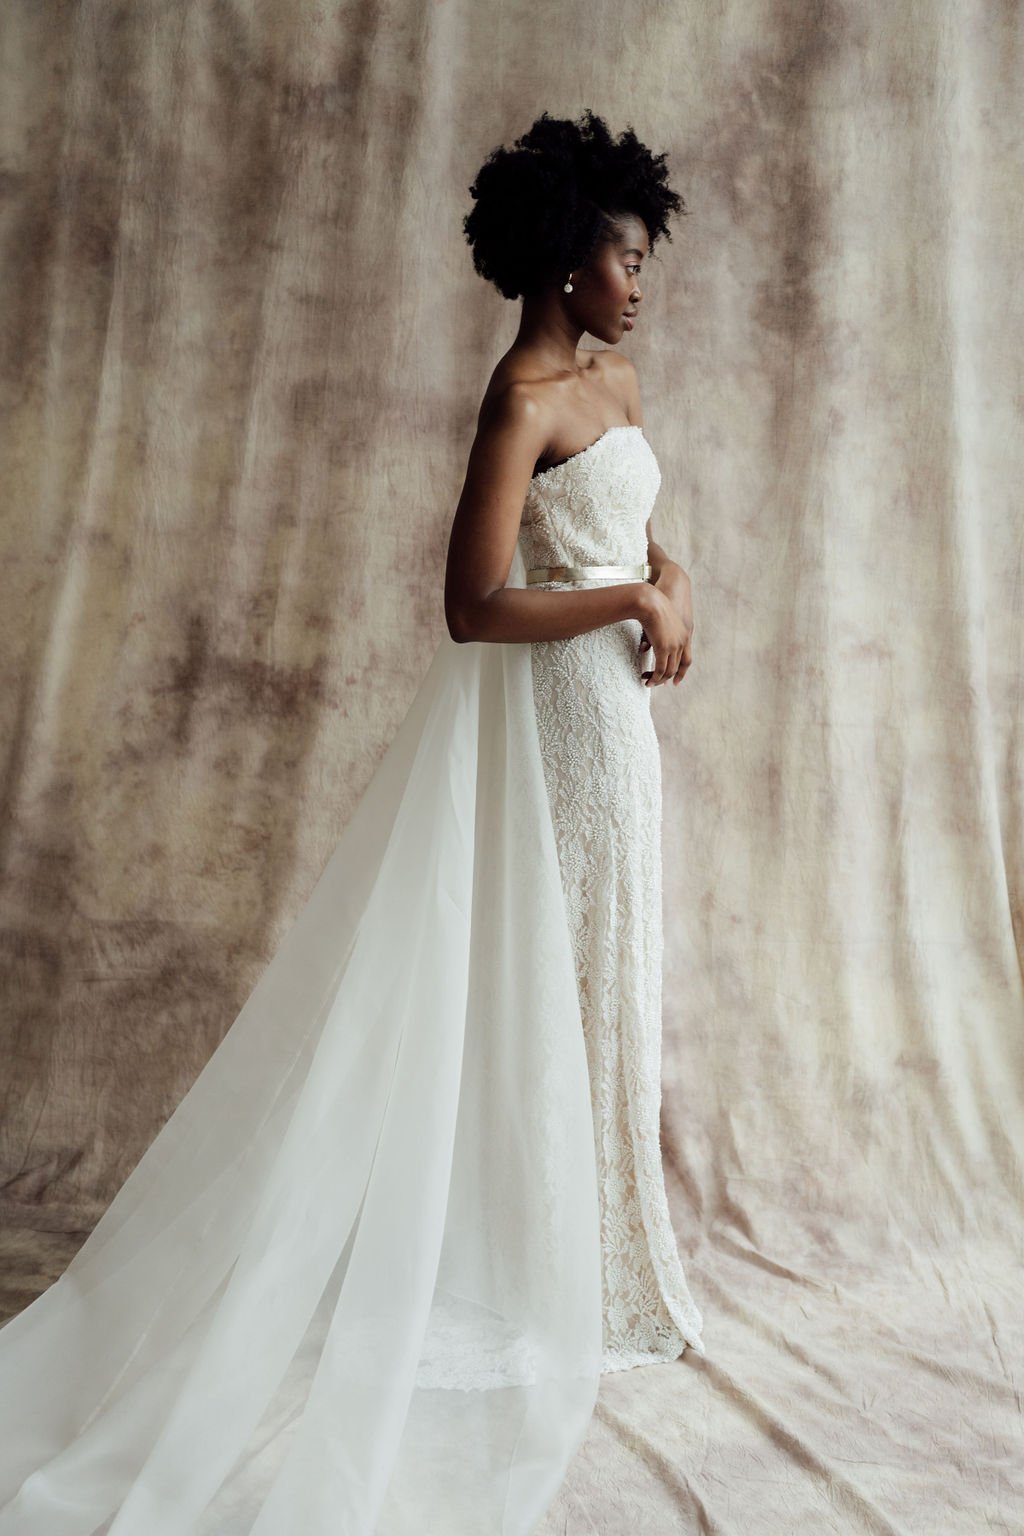 Bespoke, Romantic Wedding Dress Designer | Wilden London